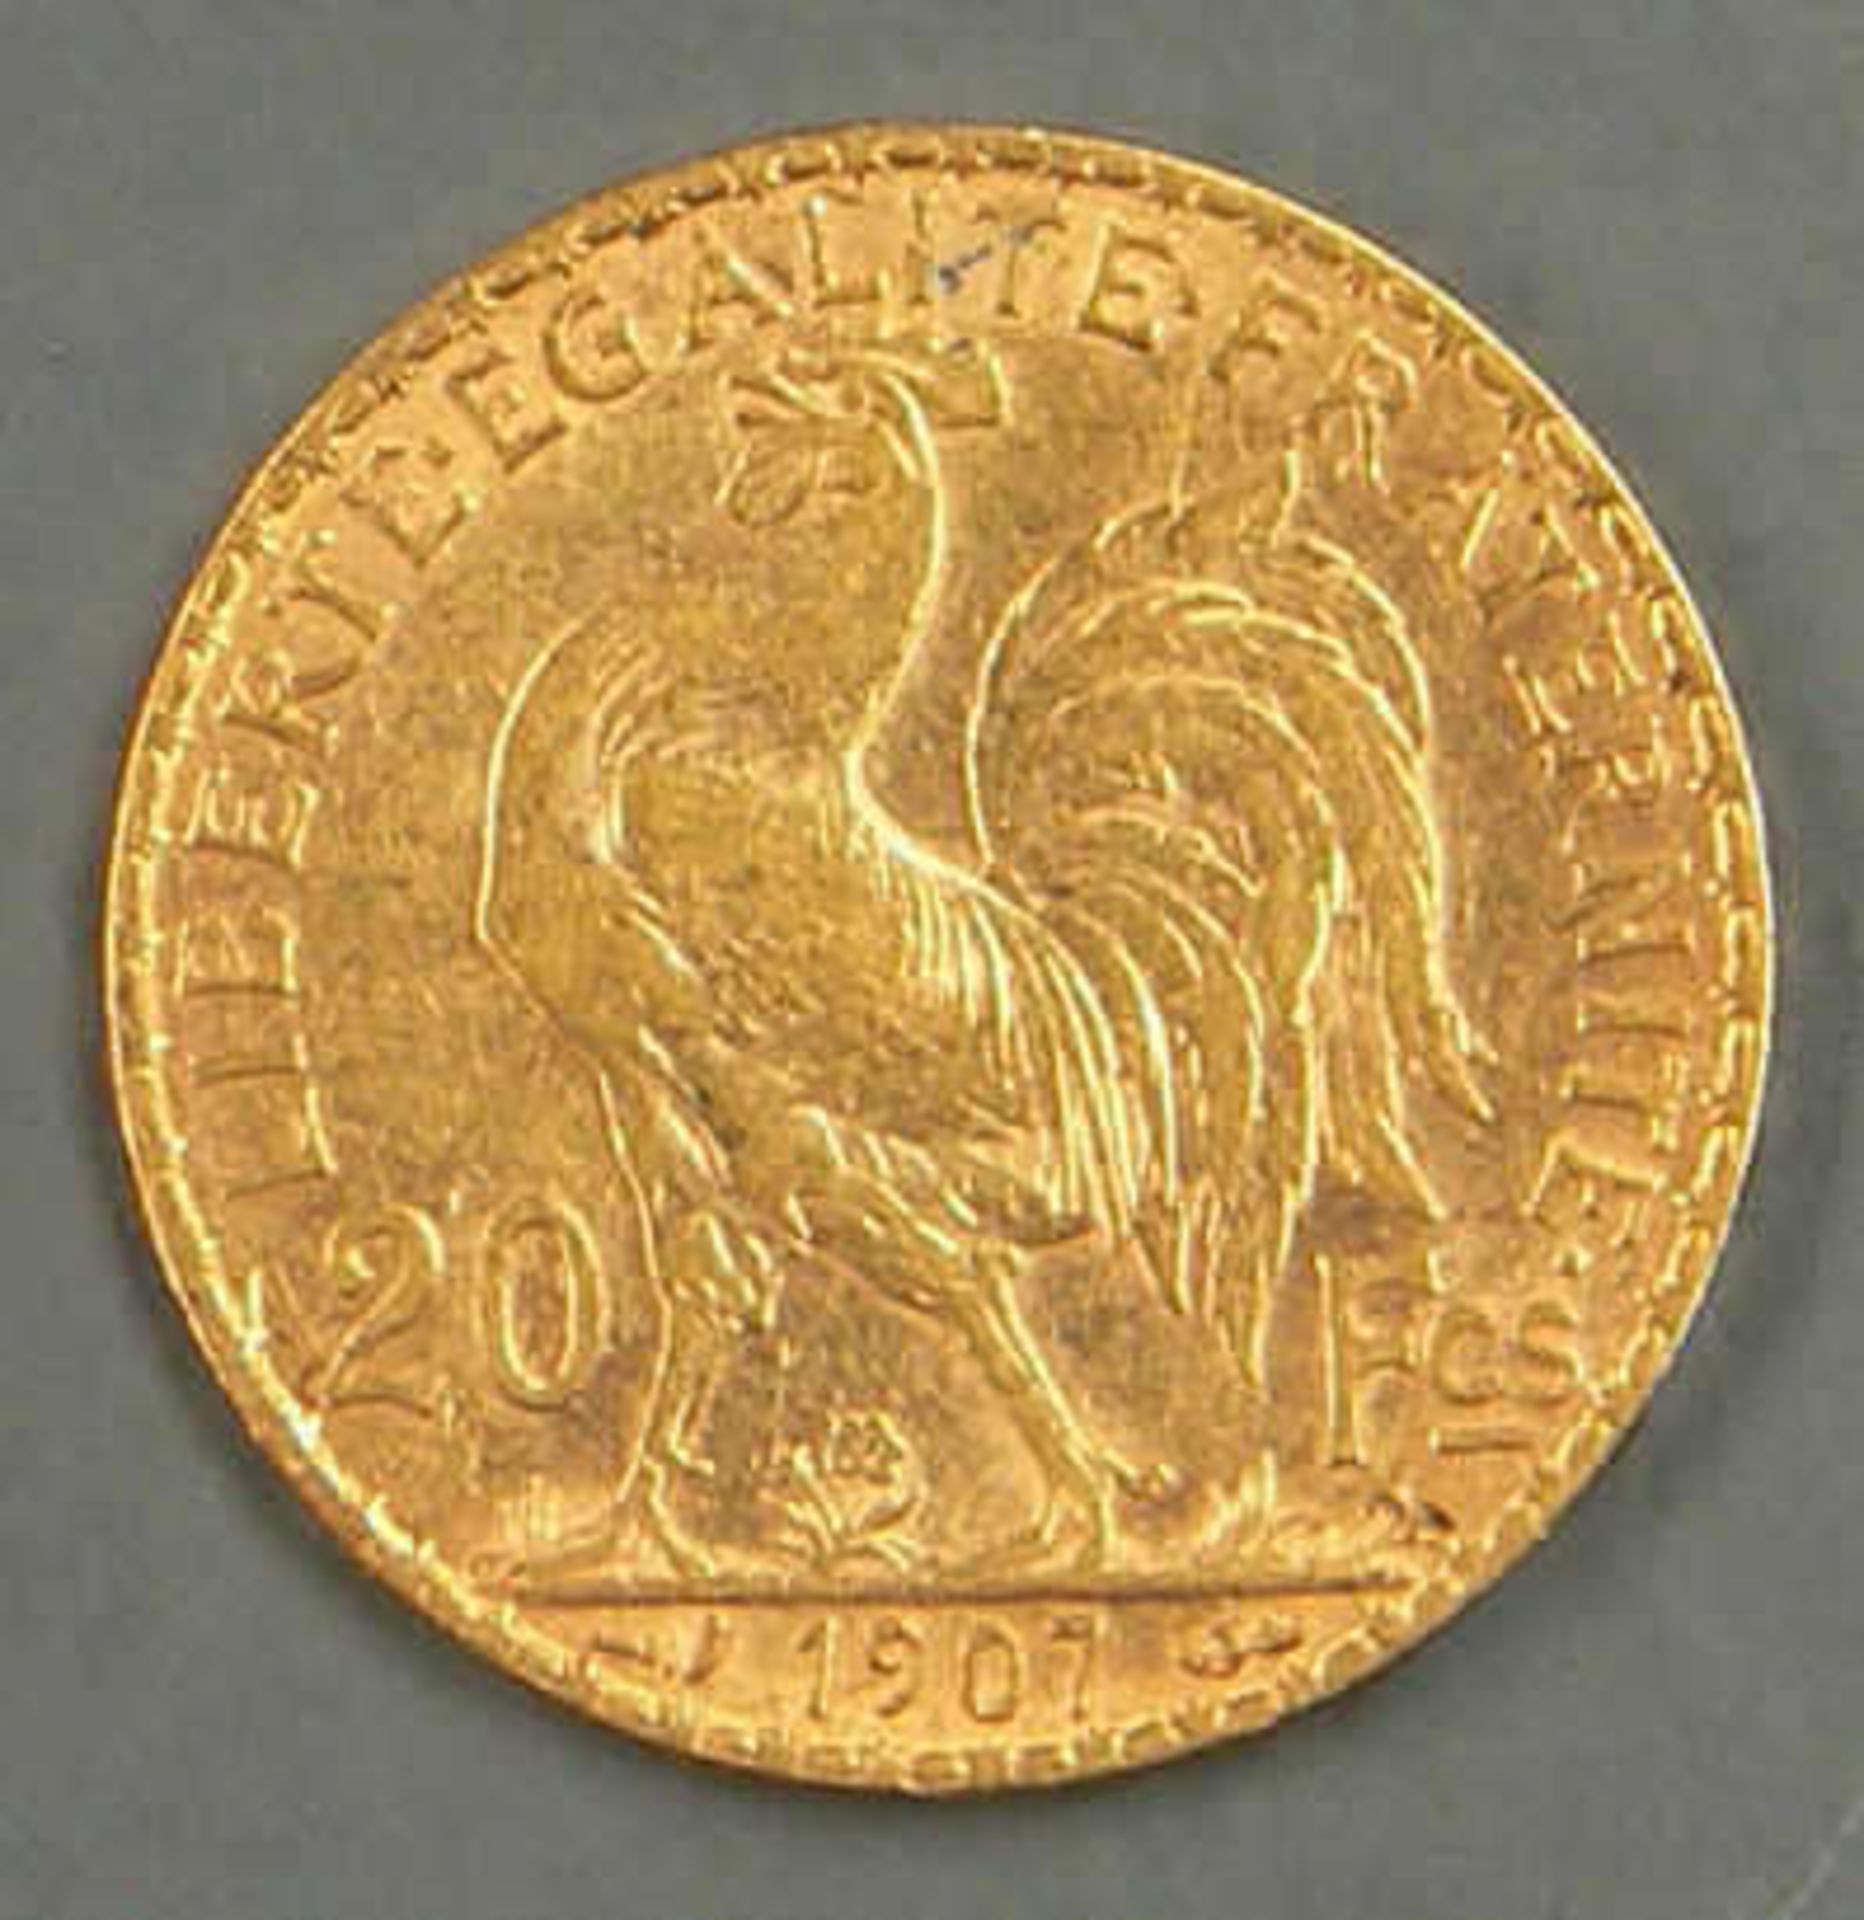 Frankreich 1907, 20.- Francs - Goldmünze. Gold 900. Gewicht: ca. 6,49 g. Erhaltung: vz. France 1907,